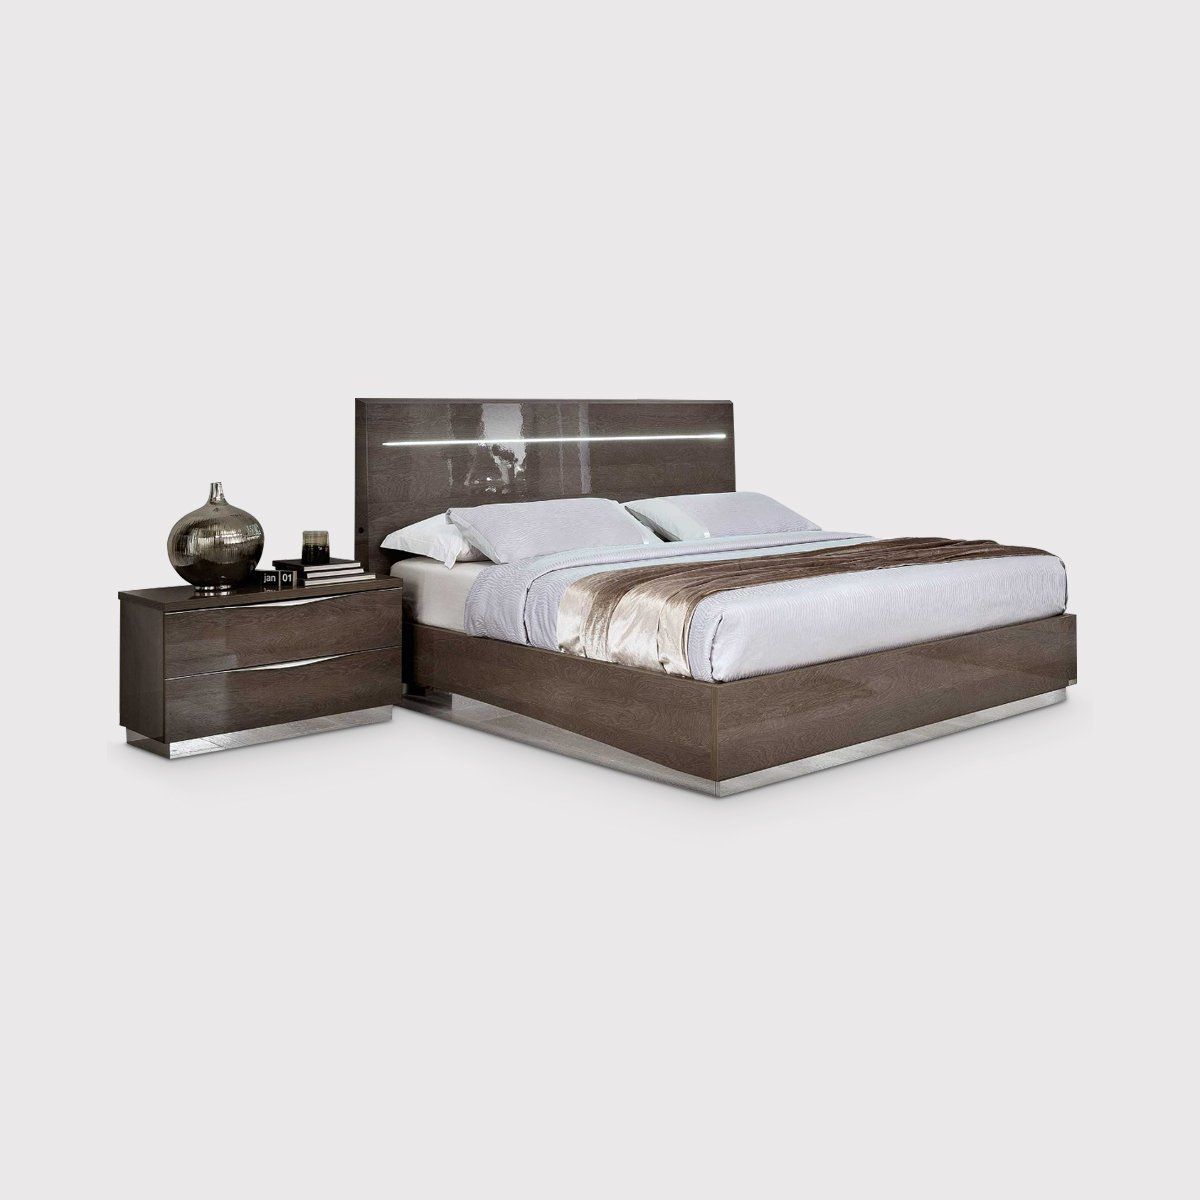 Lutyen 140cm Double Bed With Orthopedic Wooden Slats, Grey | W148cm | Barker & Stonehouse